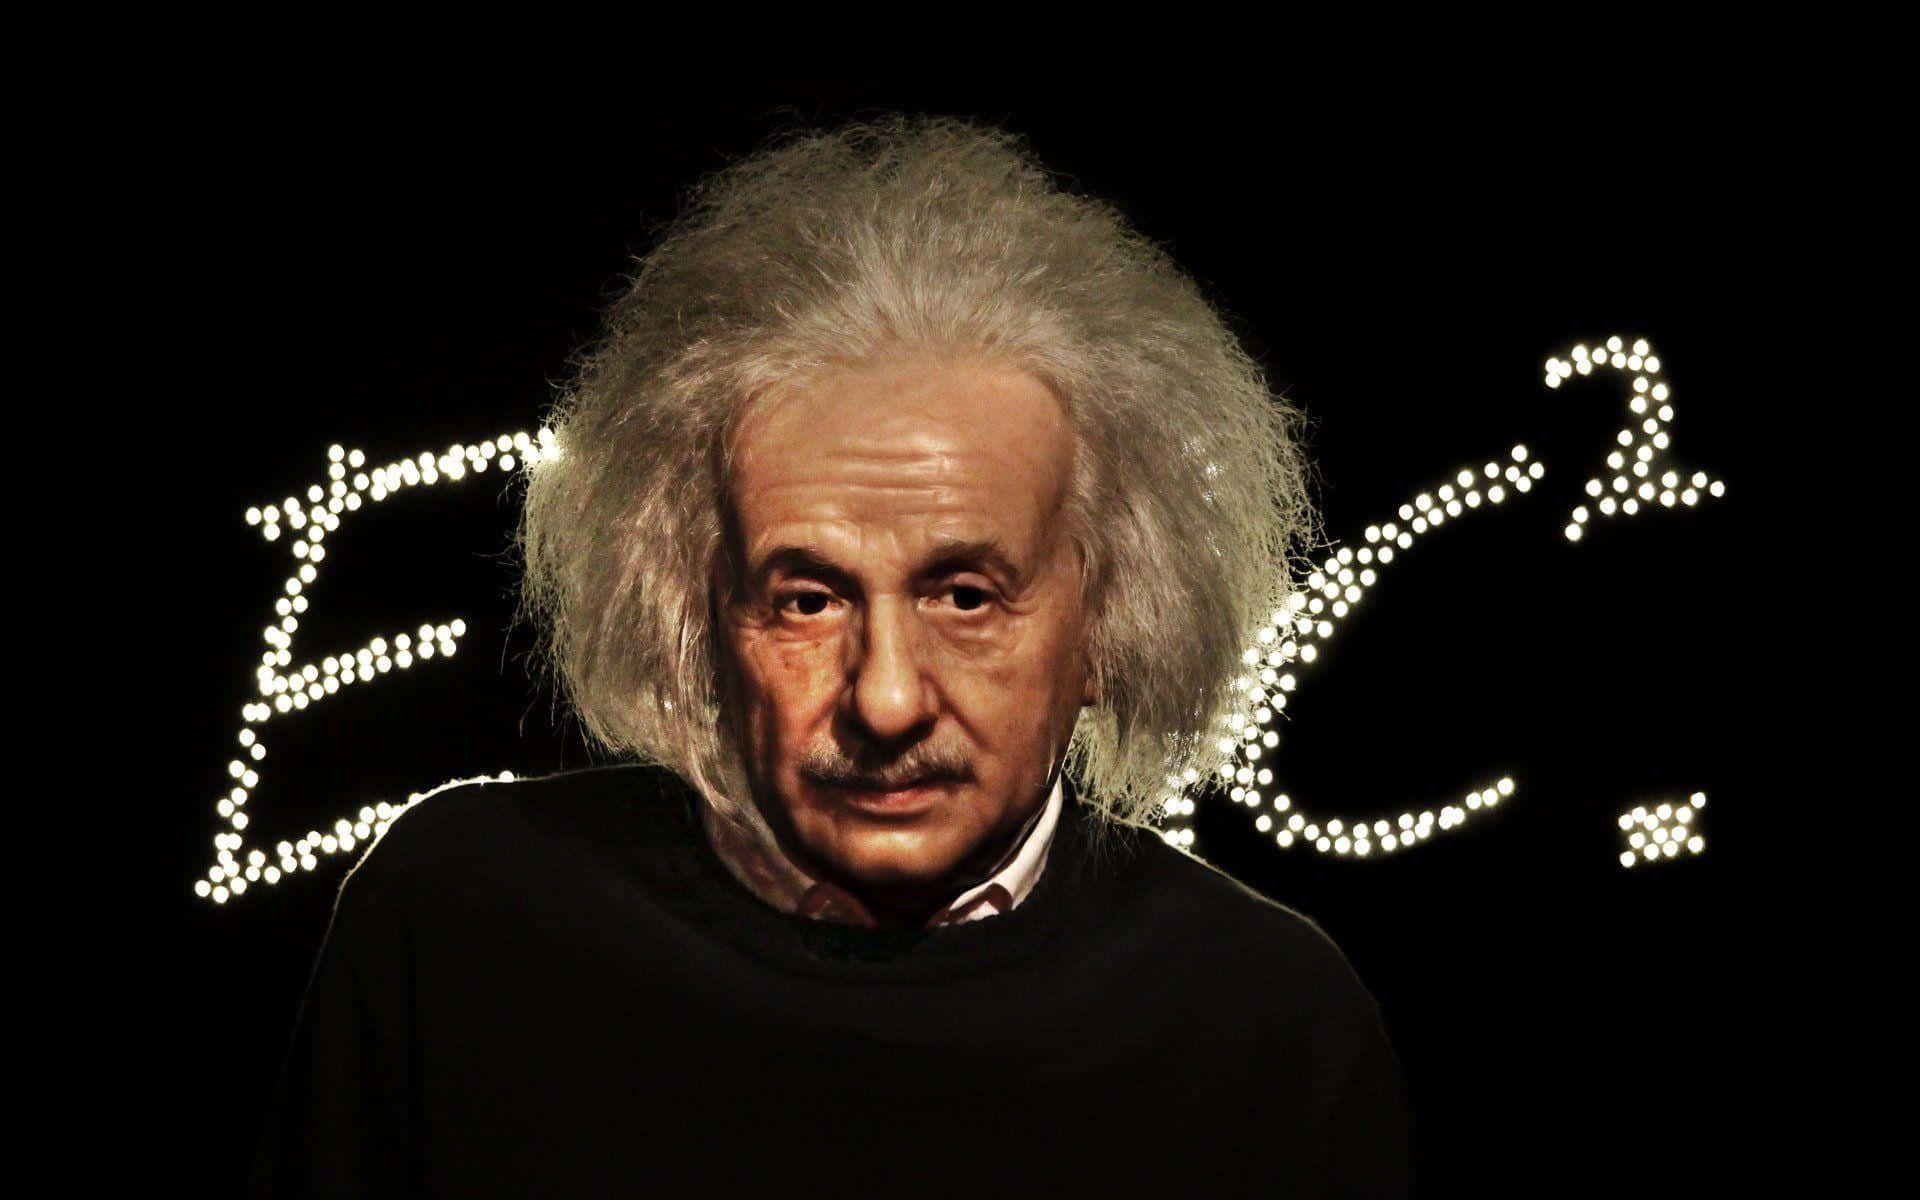 Albert Einstein Quote iPhone Wallpapers Free Download